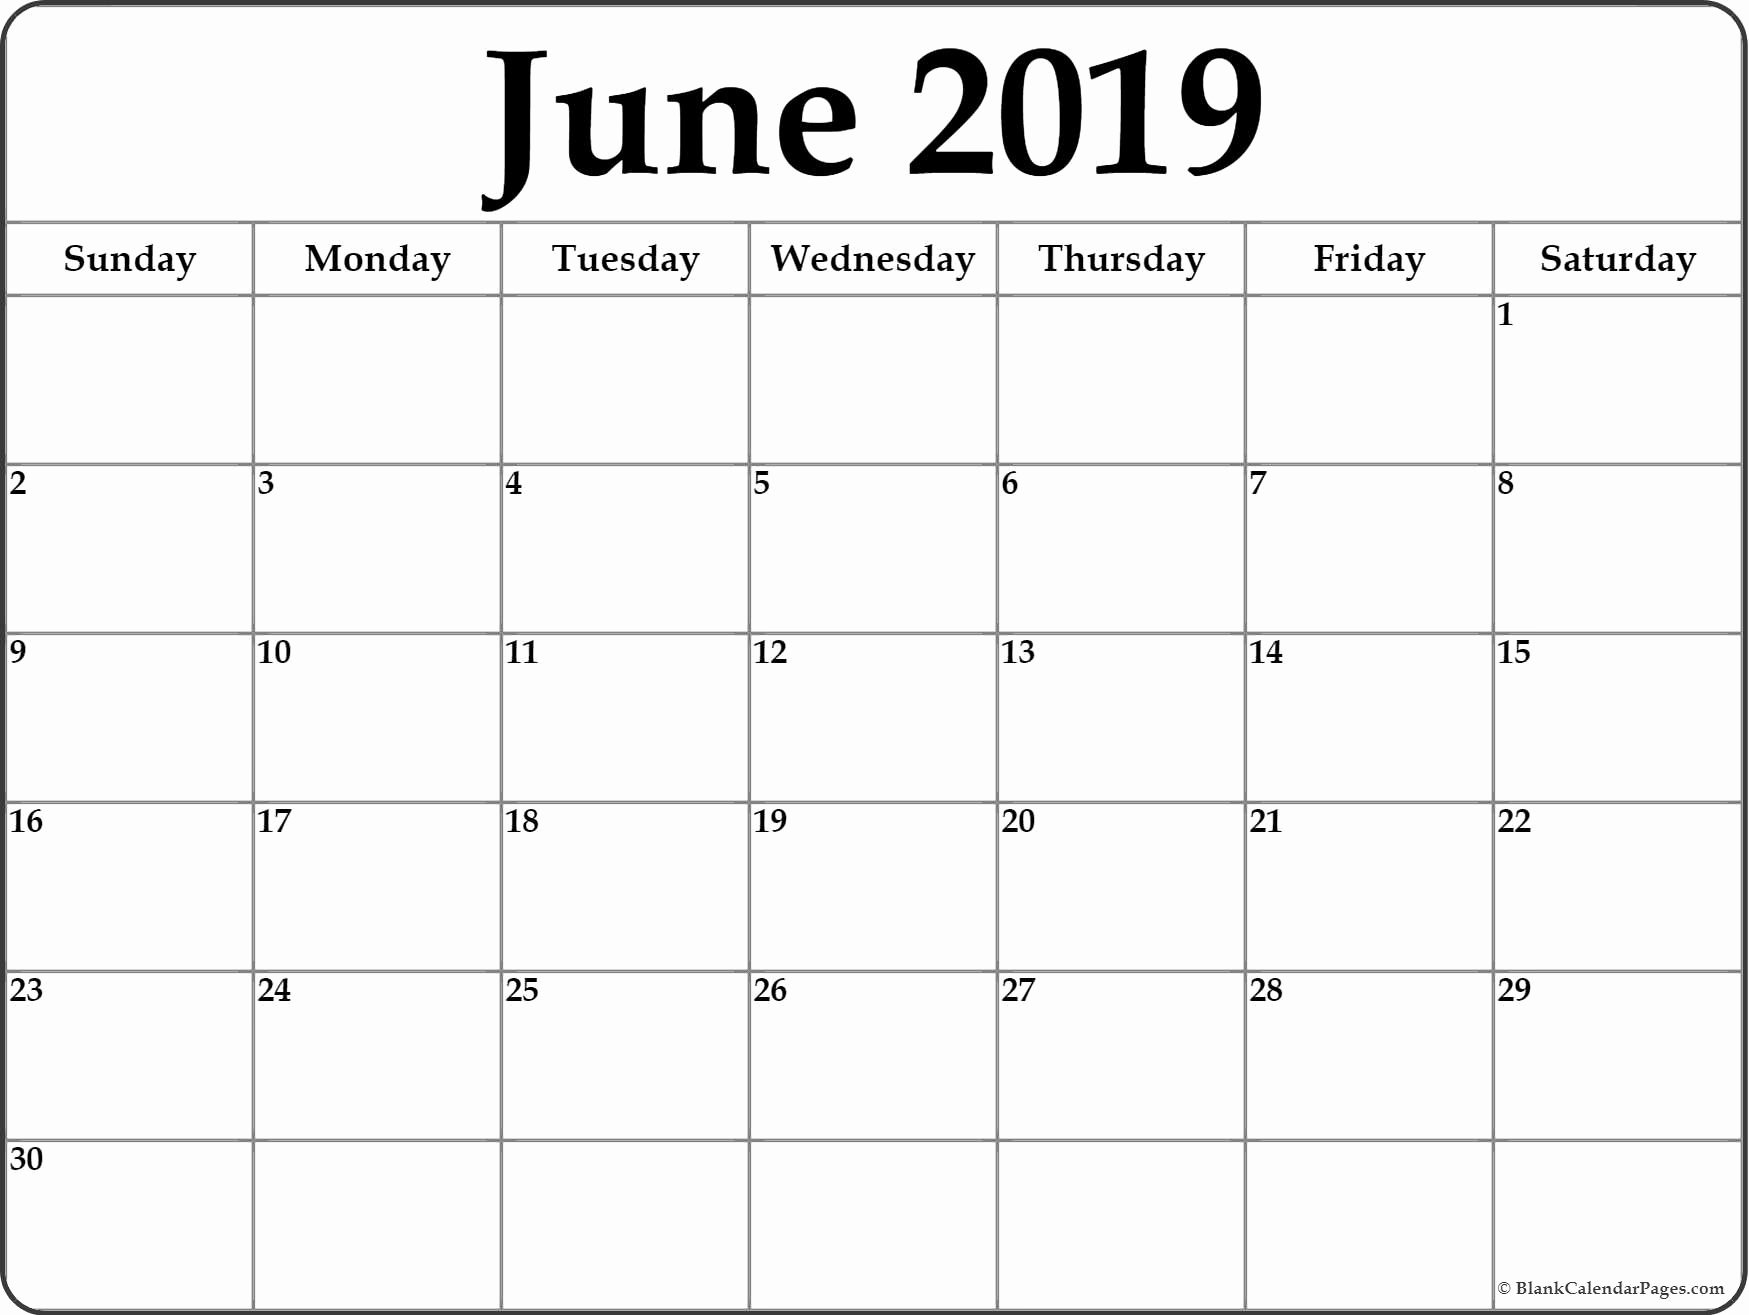 Monthly Calendar Template 2019 Awesome June 2019 Blank Calendar Templates